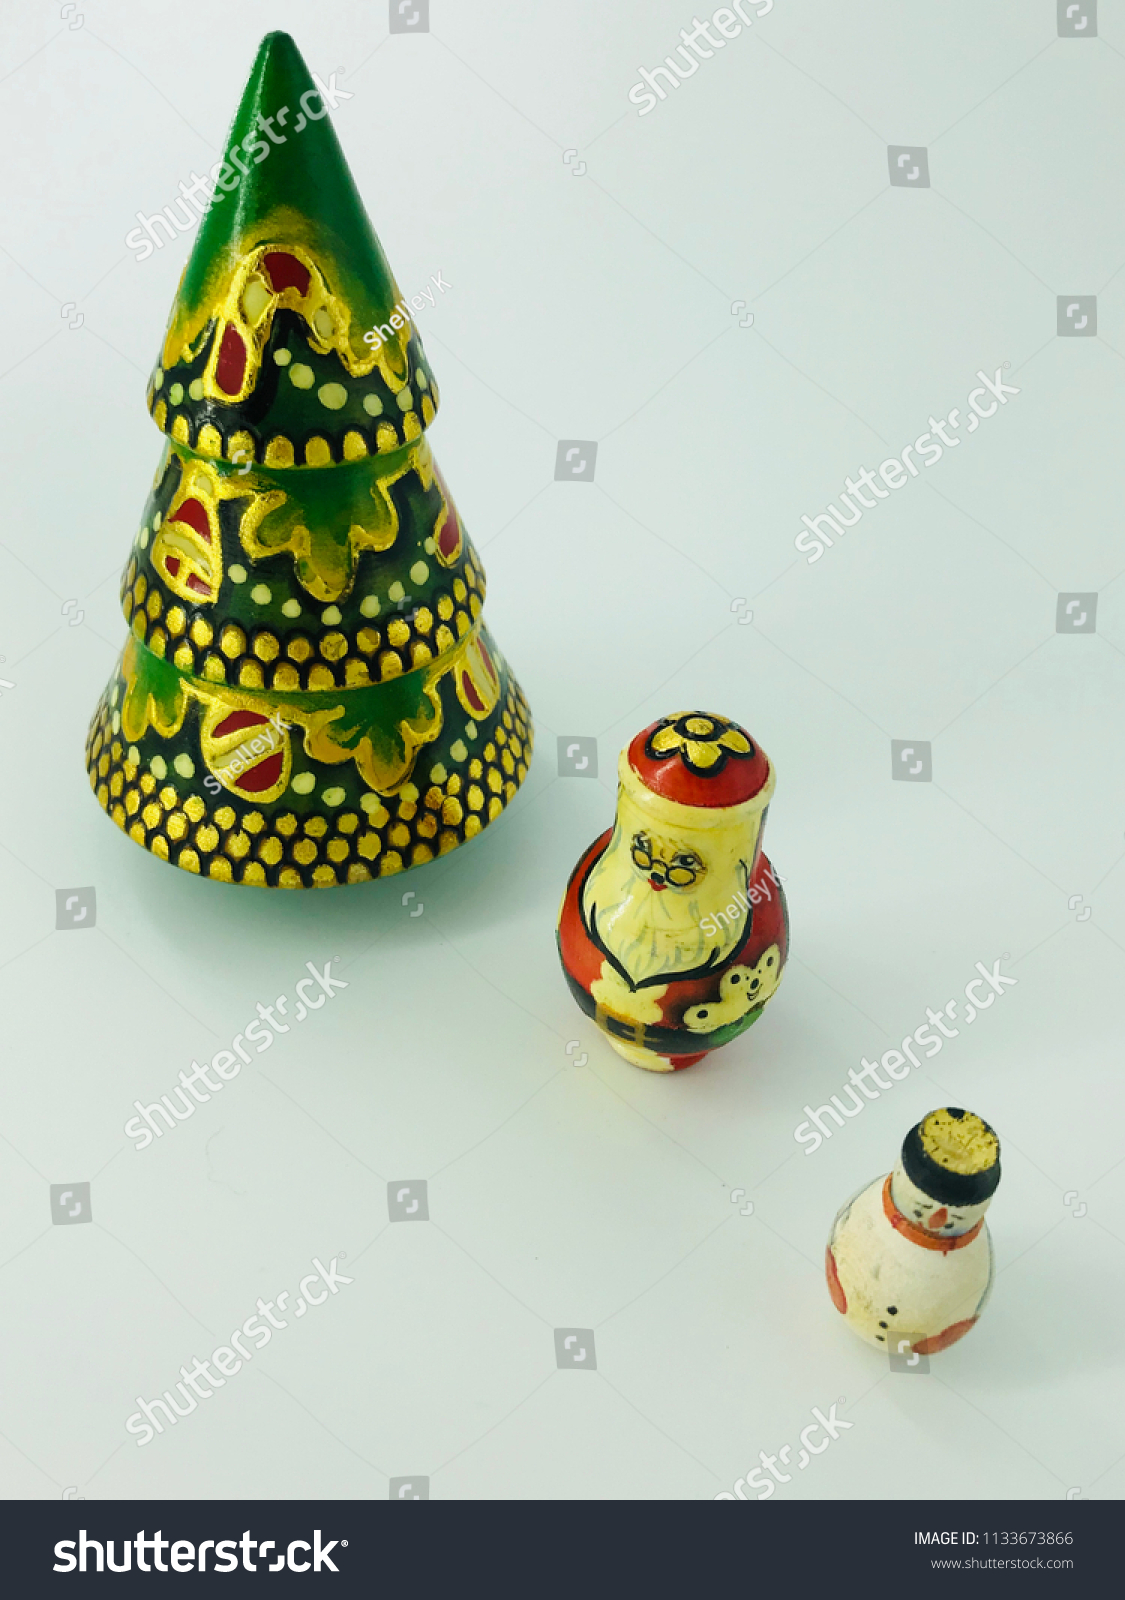 Russian Christmas dolls #1133673866